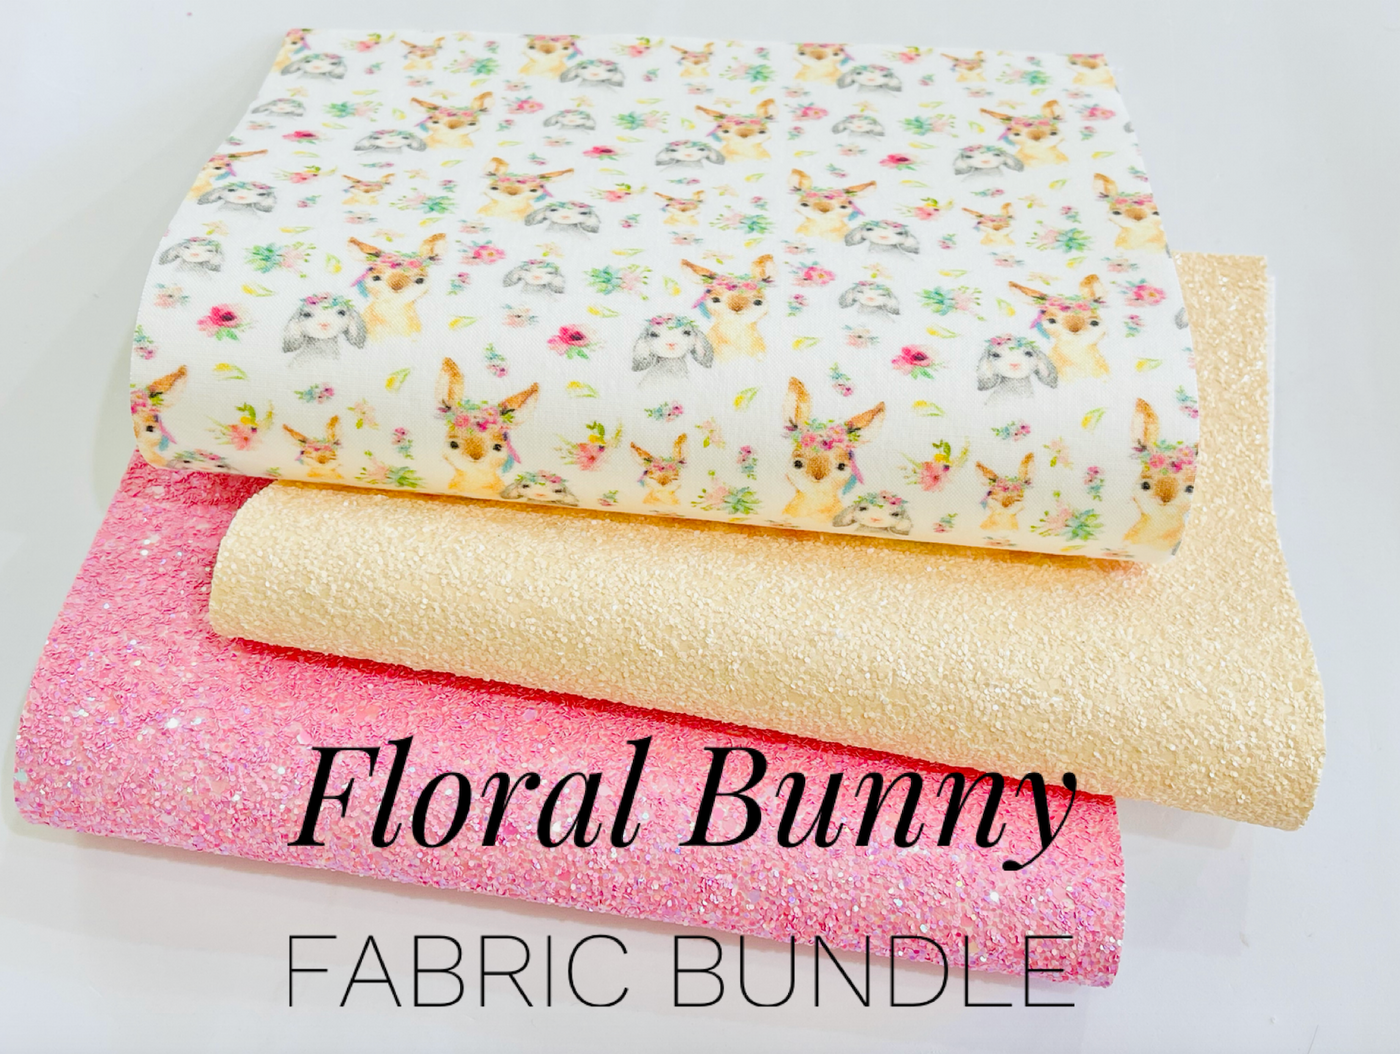 Floral Bunny 3 Sheet Bundle - Fabric Felt Merino Wool Felt with Coordinating Chunky Glitters